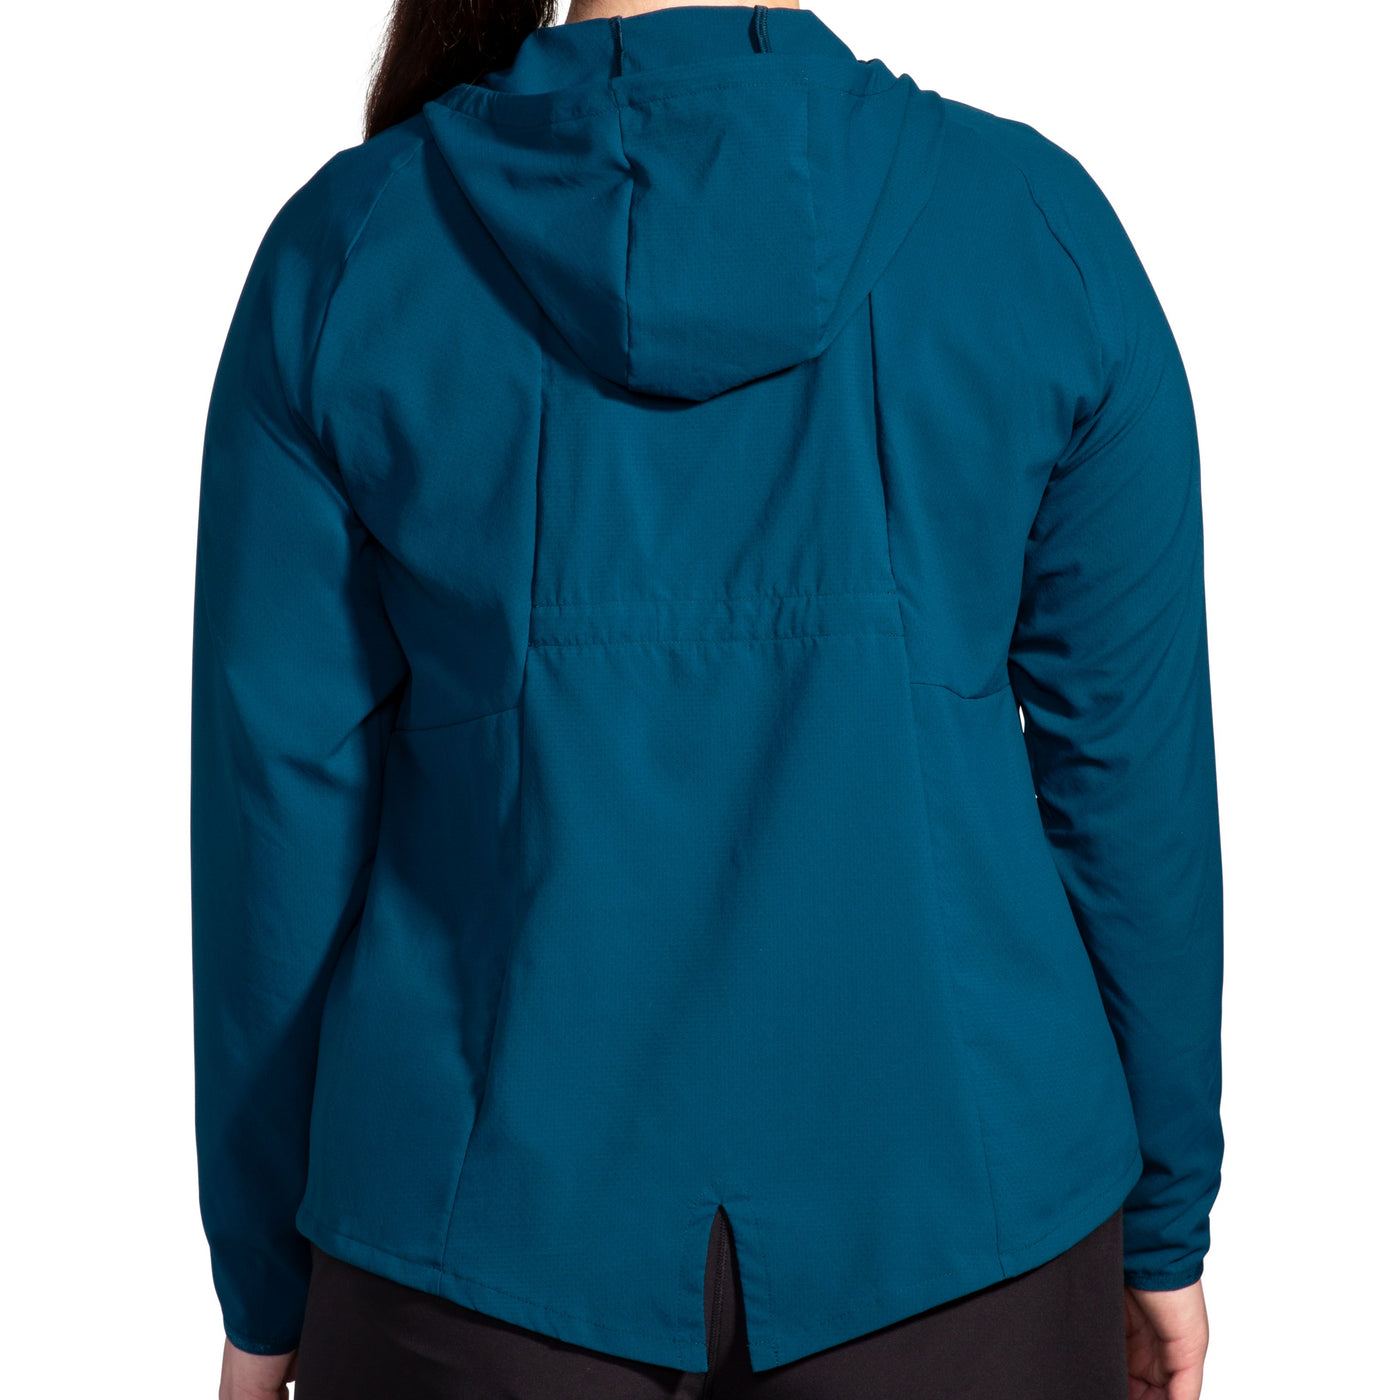 Women's Brooks Canopy Jacket - 221521-458